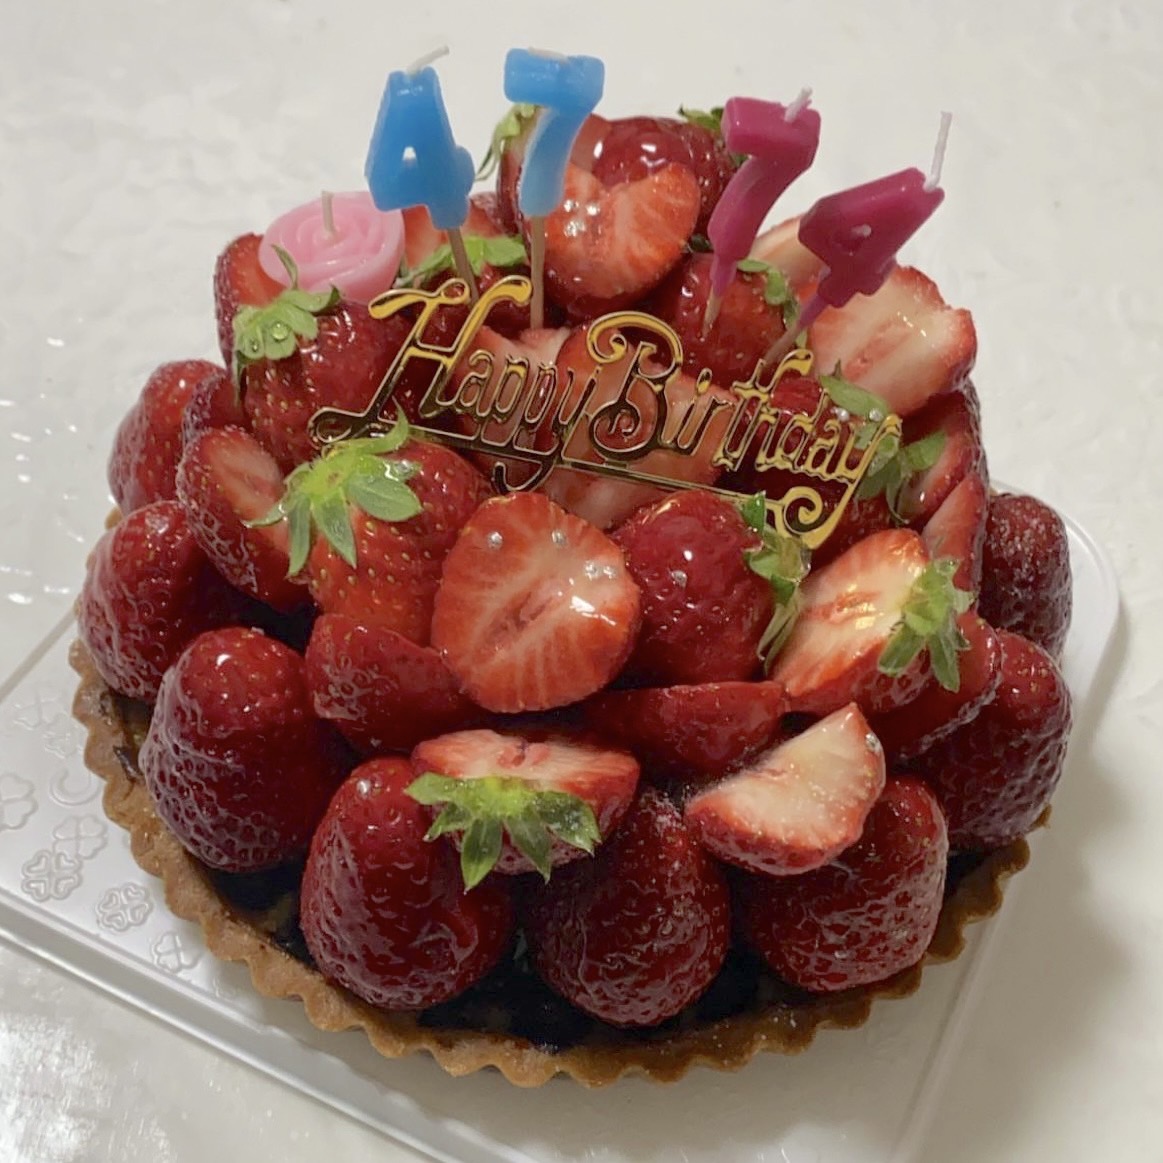 Sora的お誕生日ケーキの定番は、くずはにあるお気に入りのケーキ屋さん<ラリュミエールドゥース>のタルト。<br>